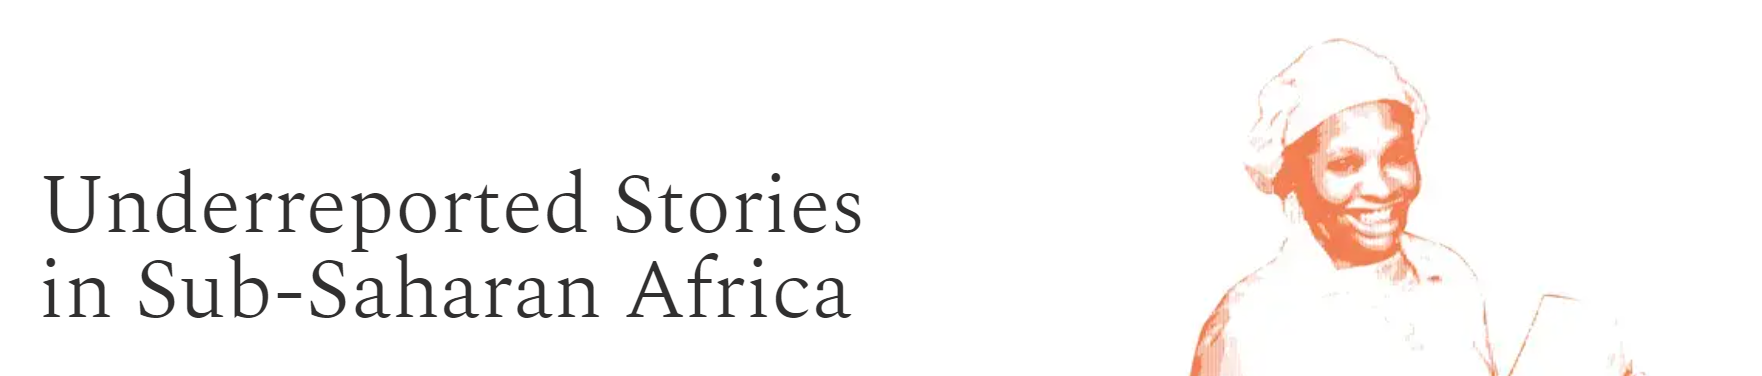 Underreported Stories in Sub-Saharan Africa